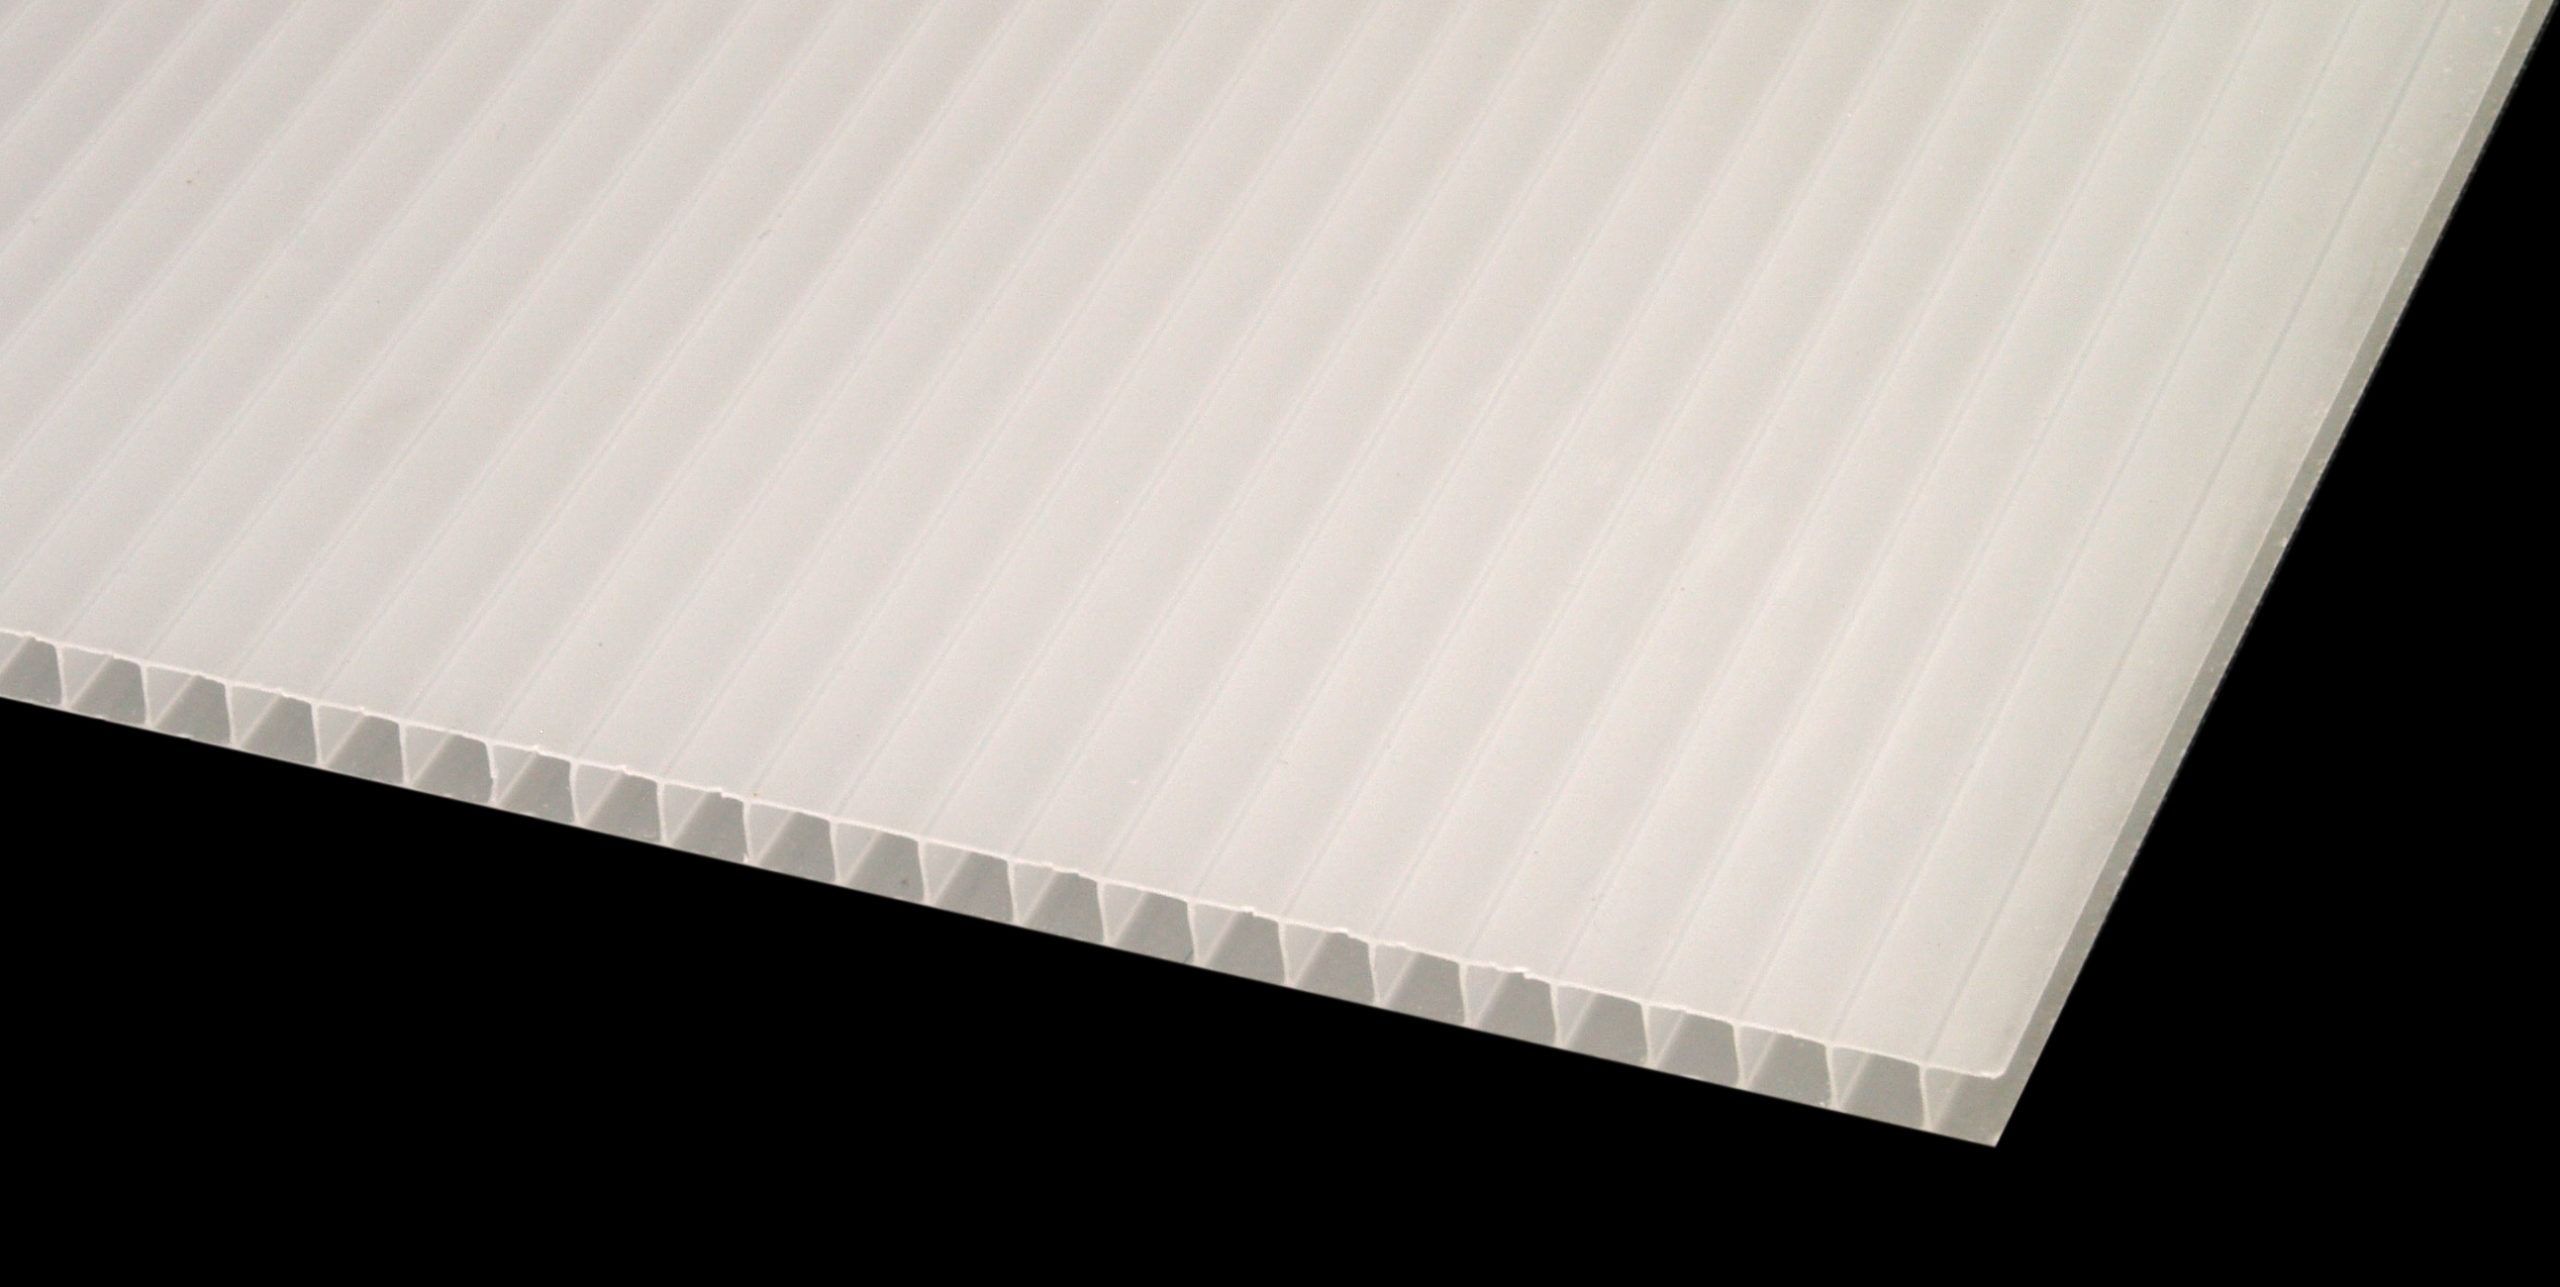 IRONLUX - Panel Policarbonato Celular Compacto - Placa policarbonato Blanco  6 mm - Plancha de policarbonato 1195 x 595 mm - Protección UV